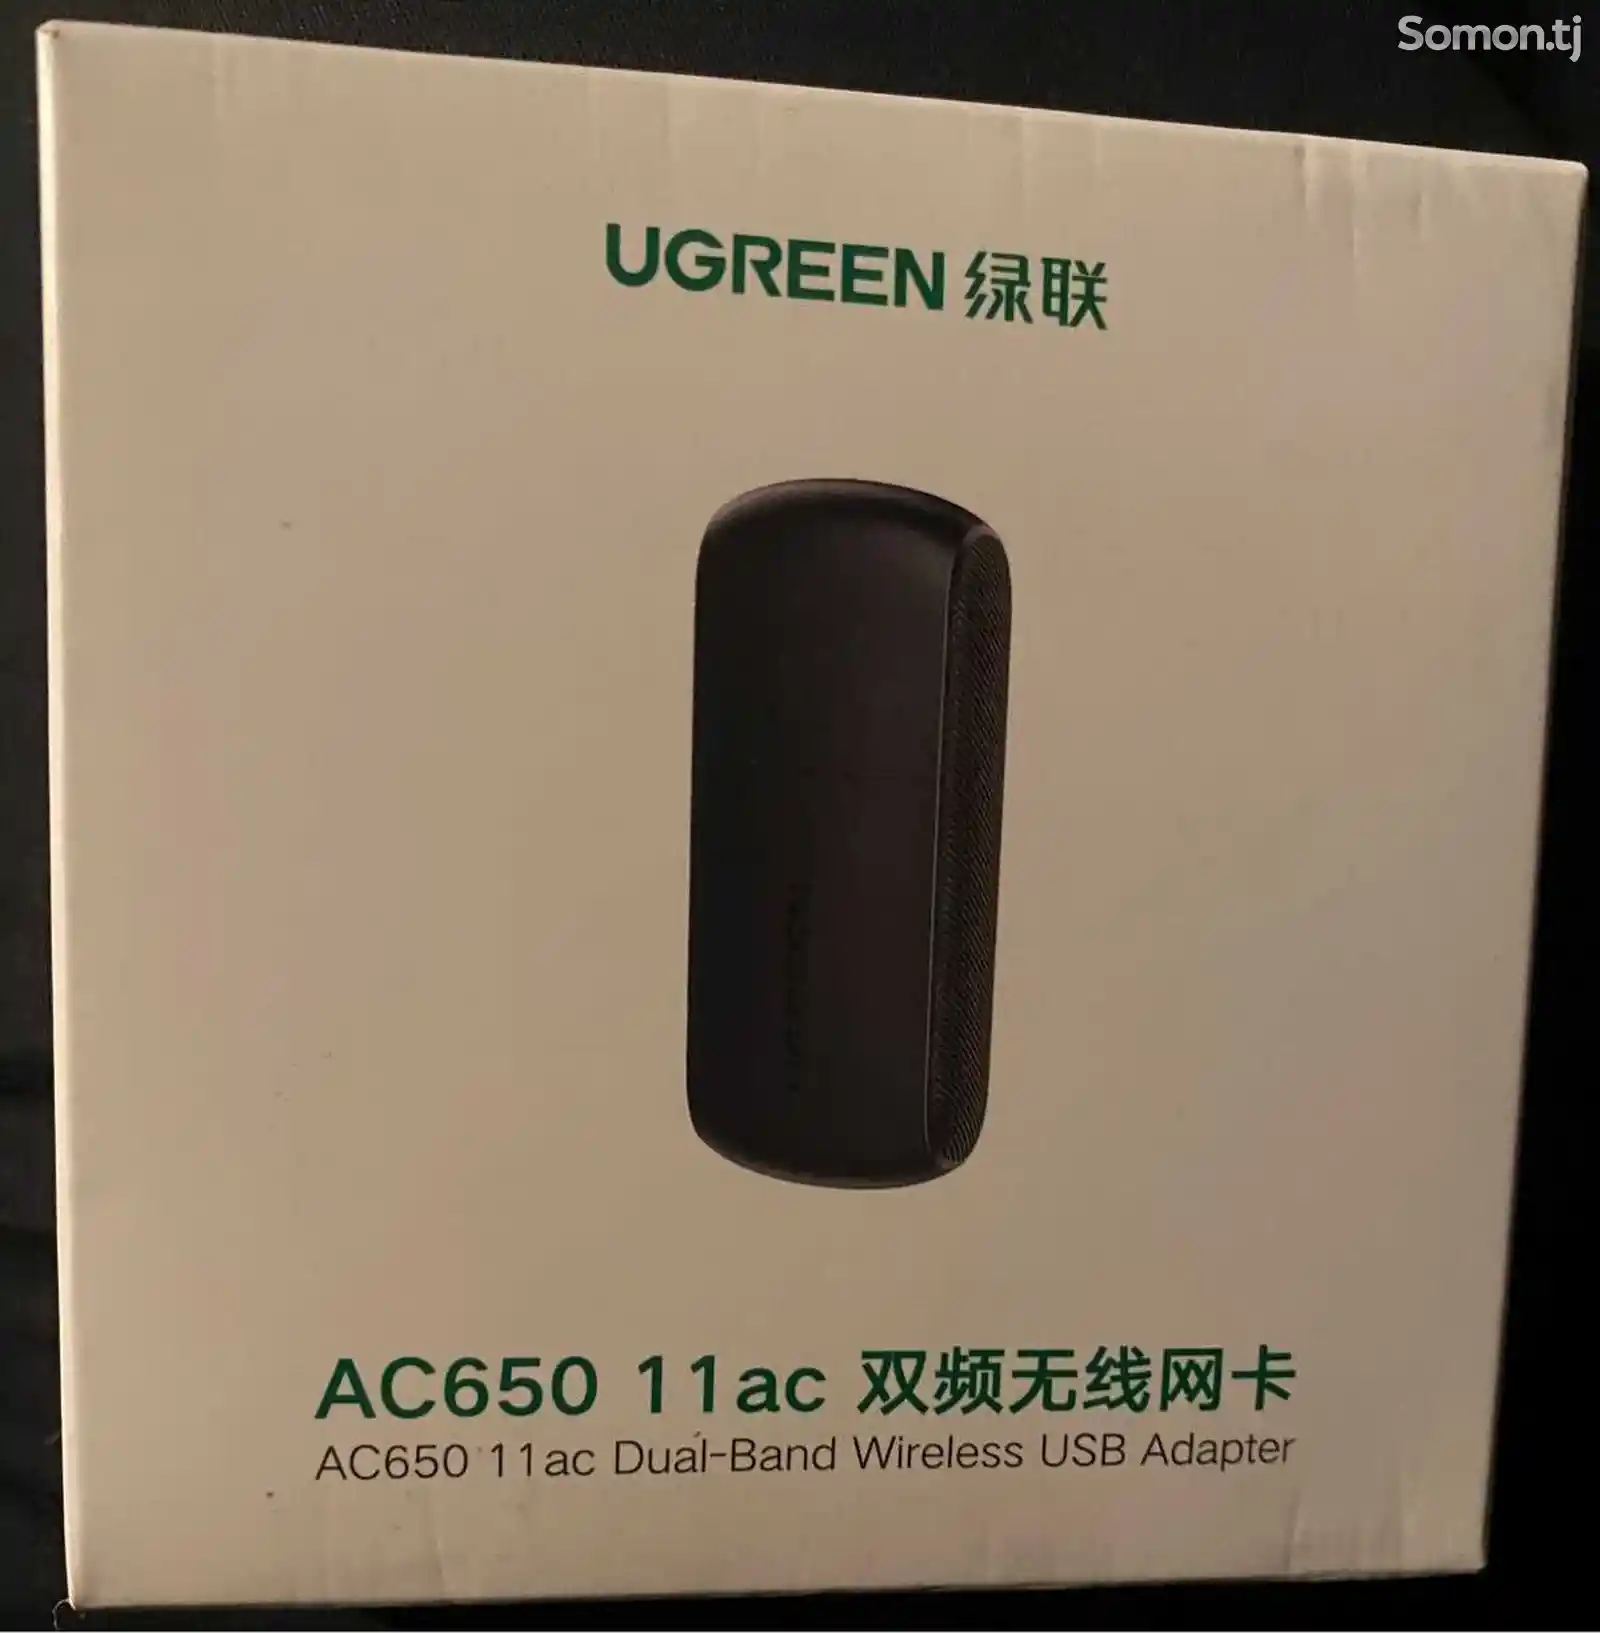 WiFi Ugreen AC650 11ac-1